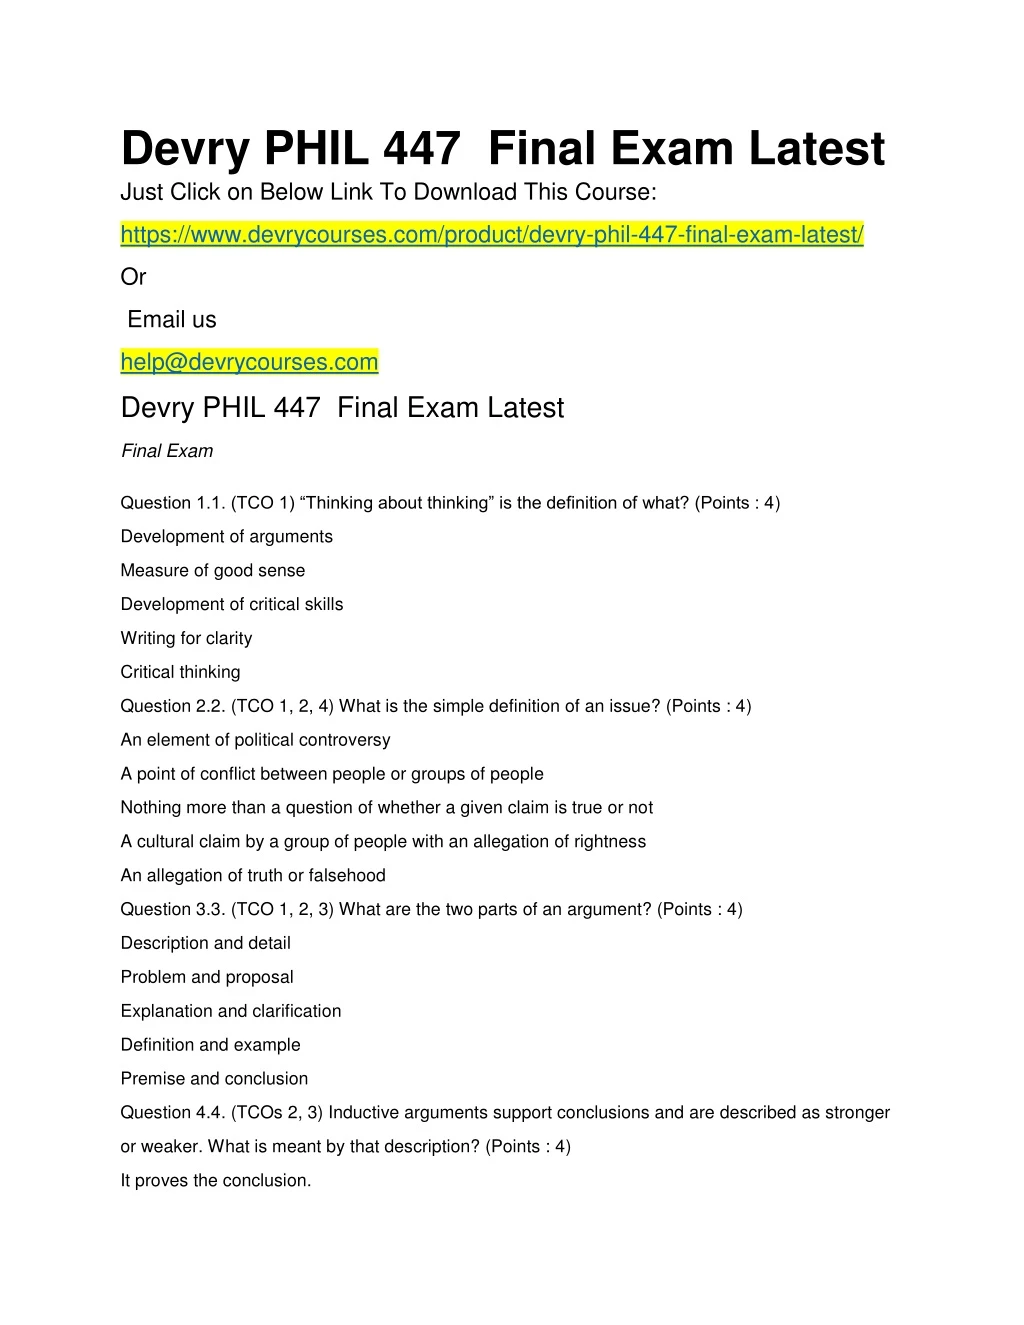 devry phil 447 final exam latest just click